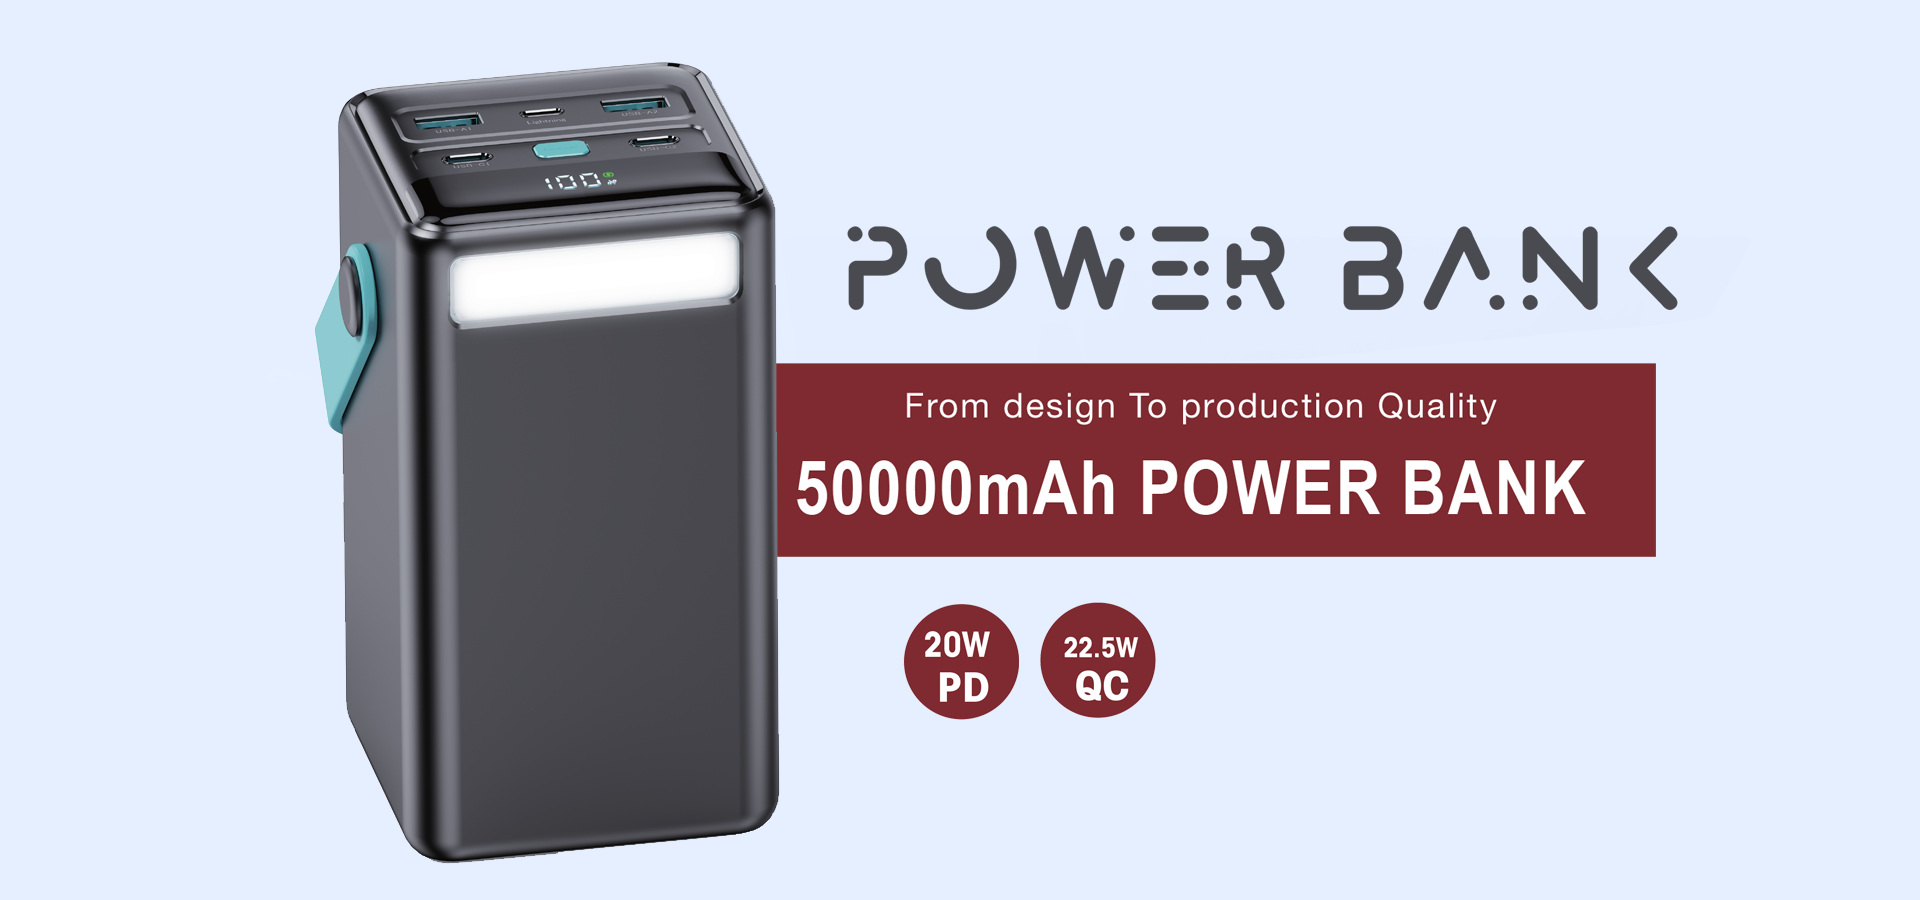 Power Bank pw-508